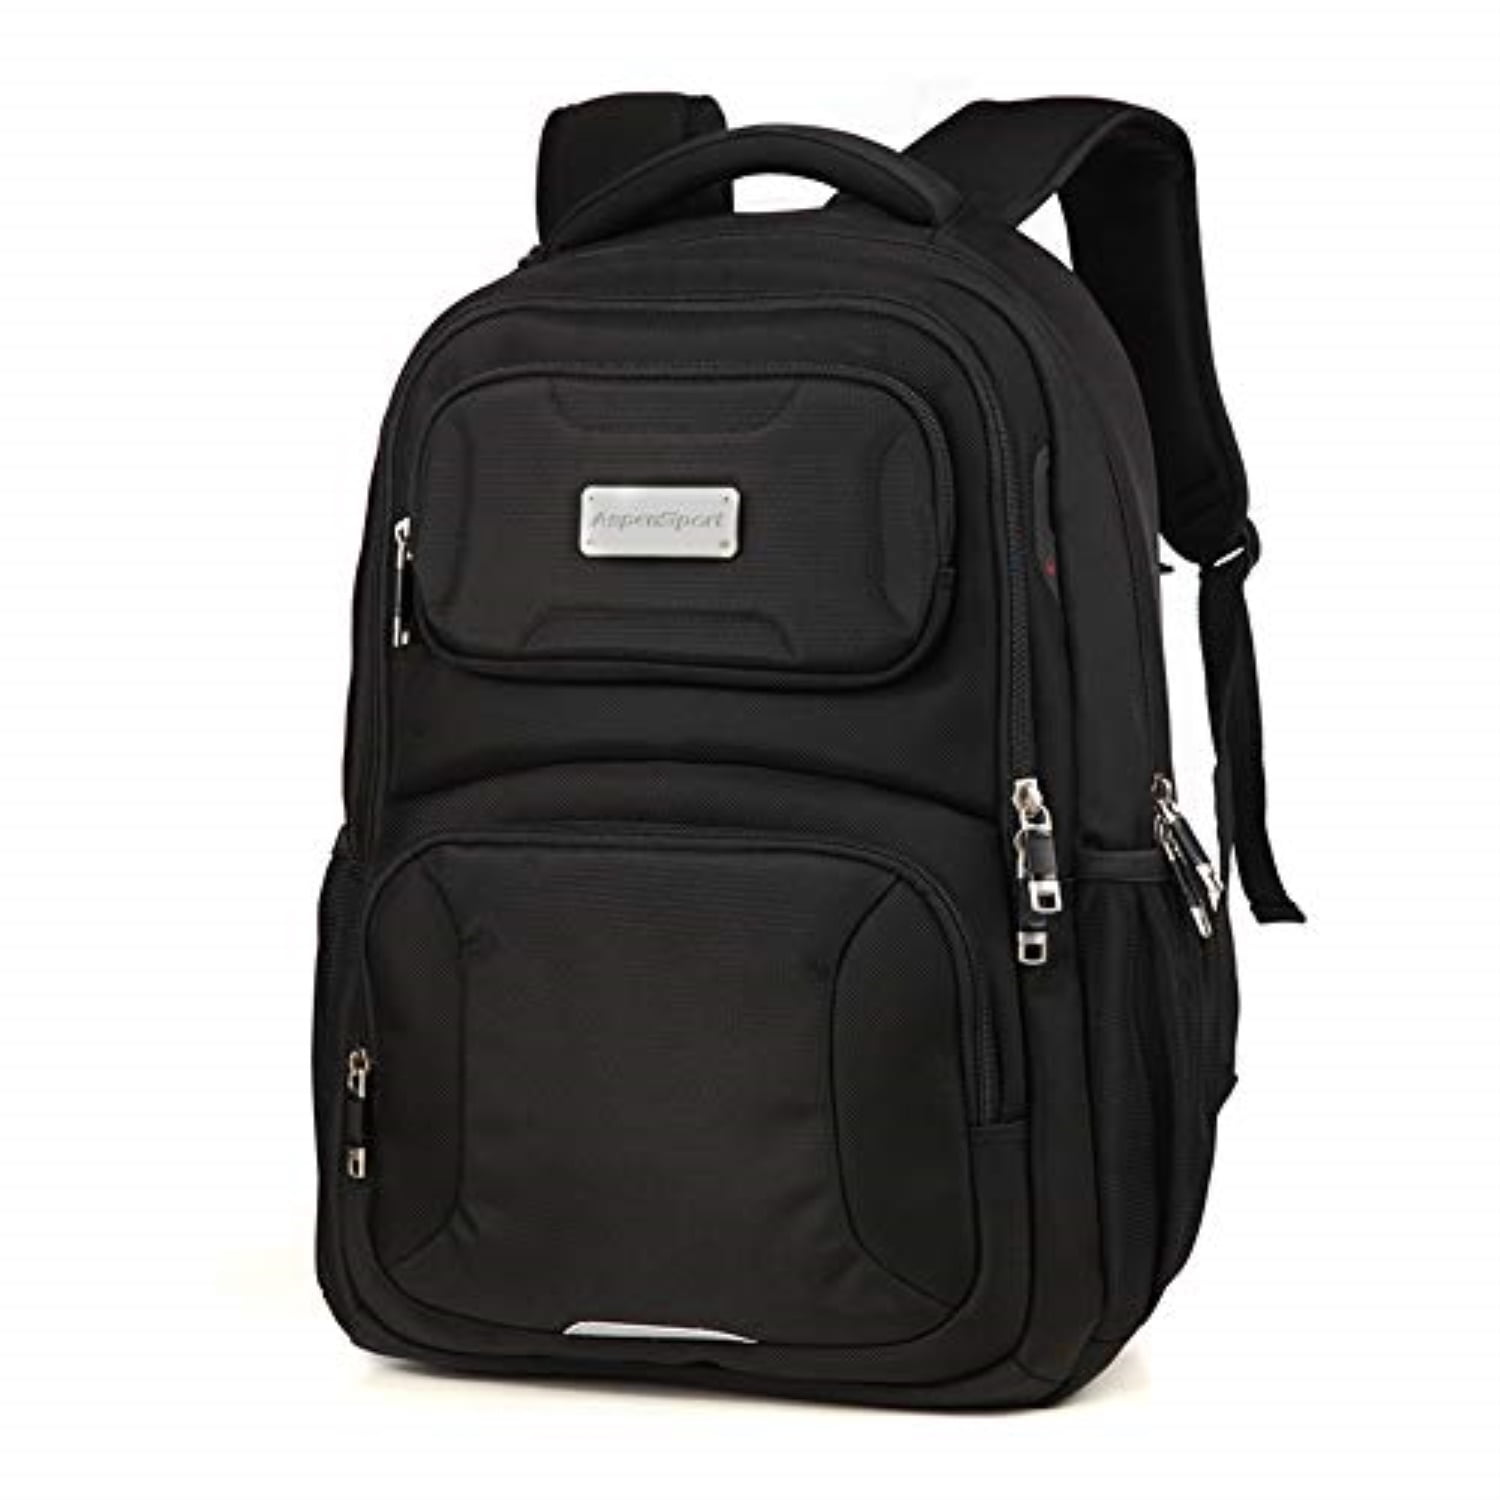 Aspen Pet - aspensport laptop backpack for school college students ...